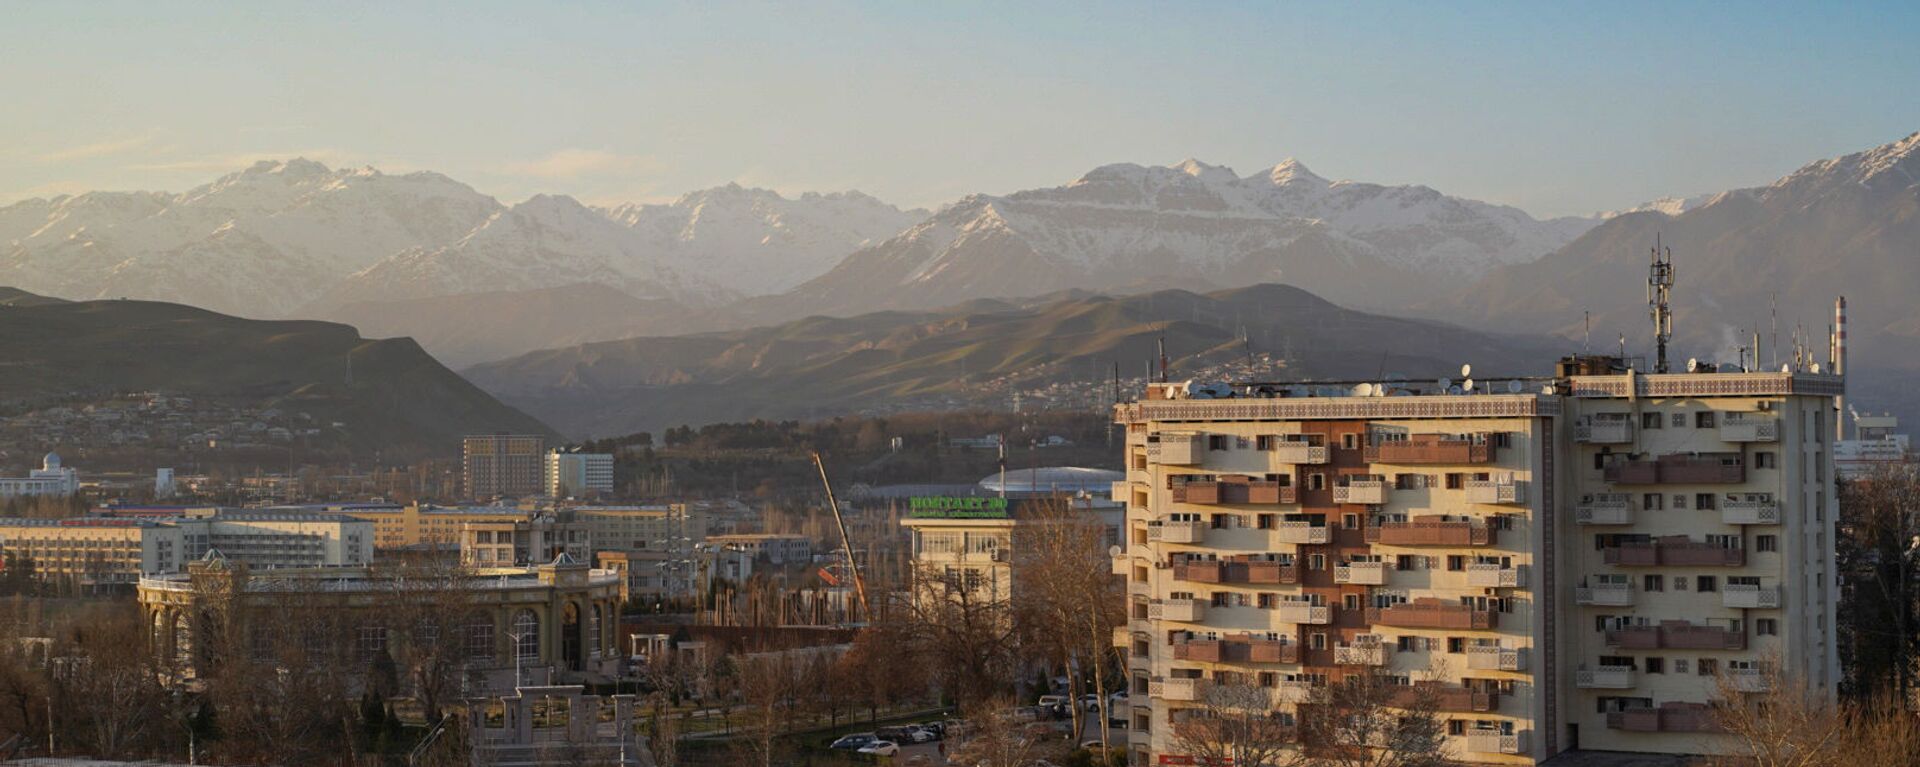 Вид на город Душанбе, 2020 год, архивное фото - Sputnik Тоҷикистон, 1920, 18.02.2021